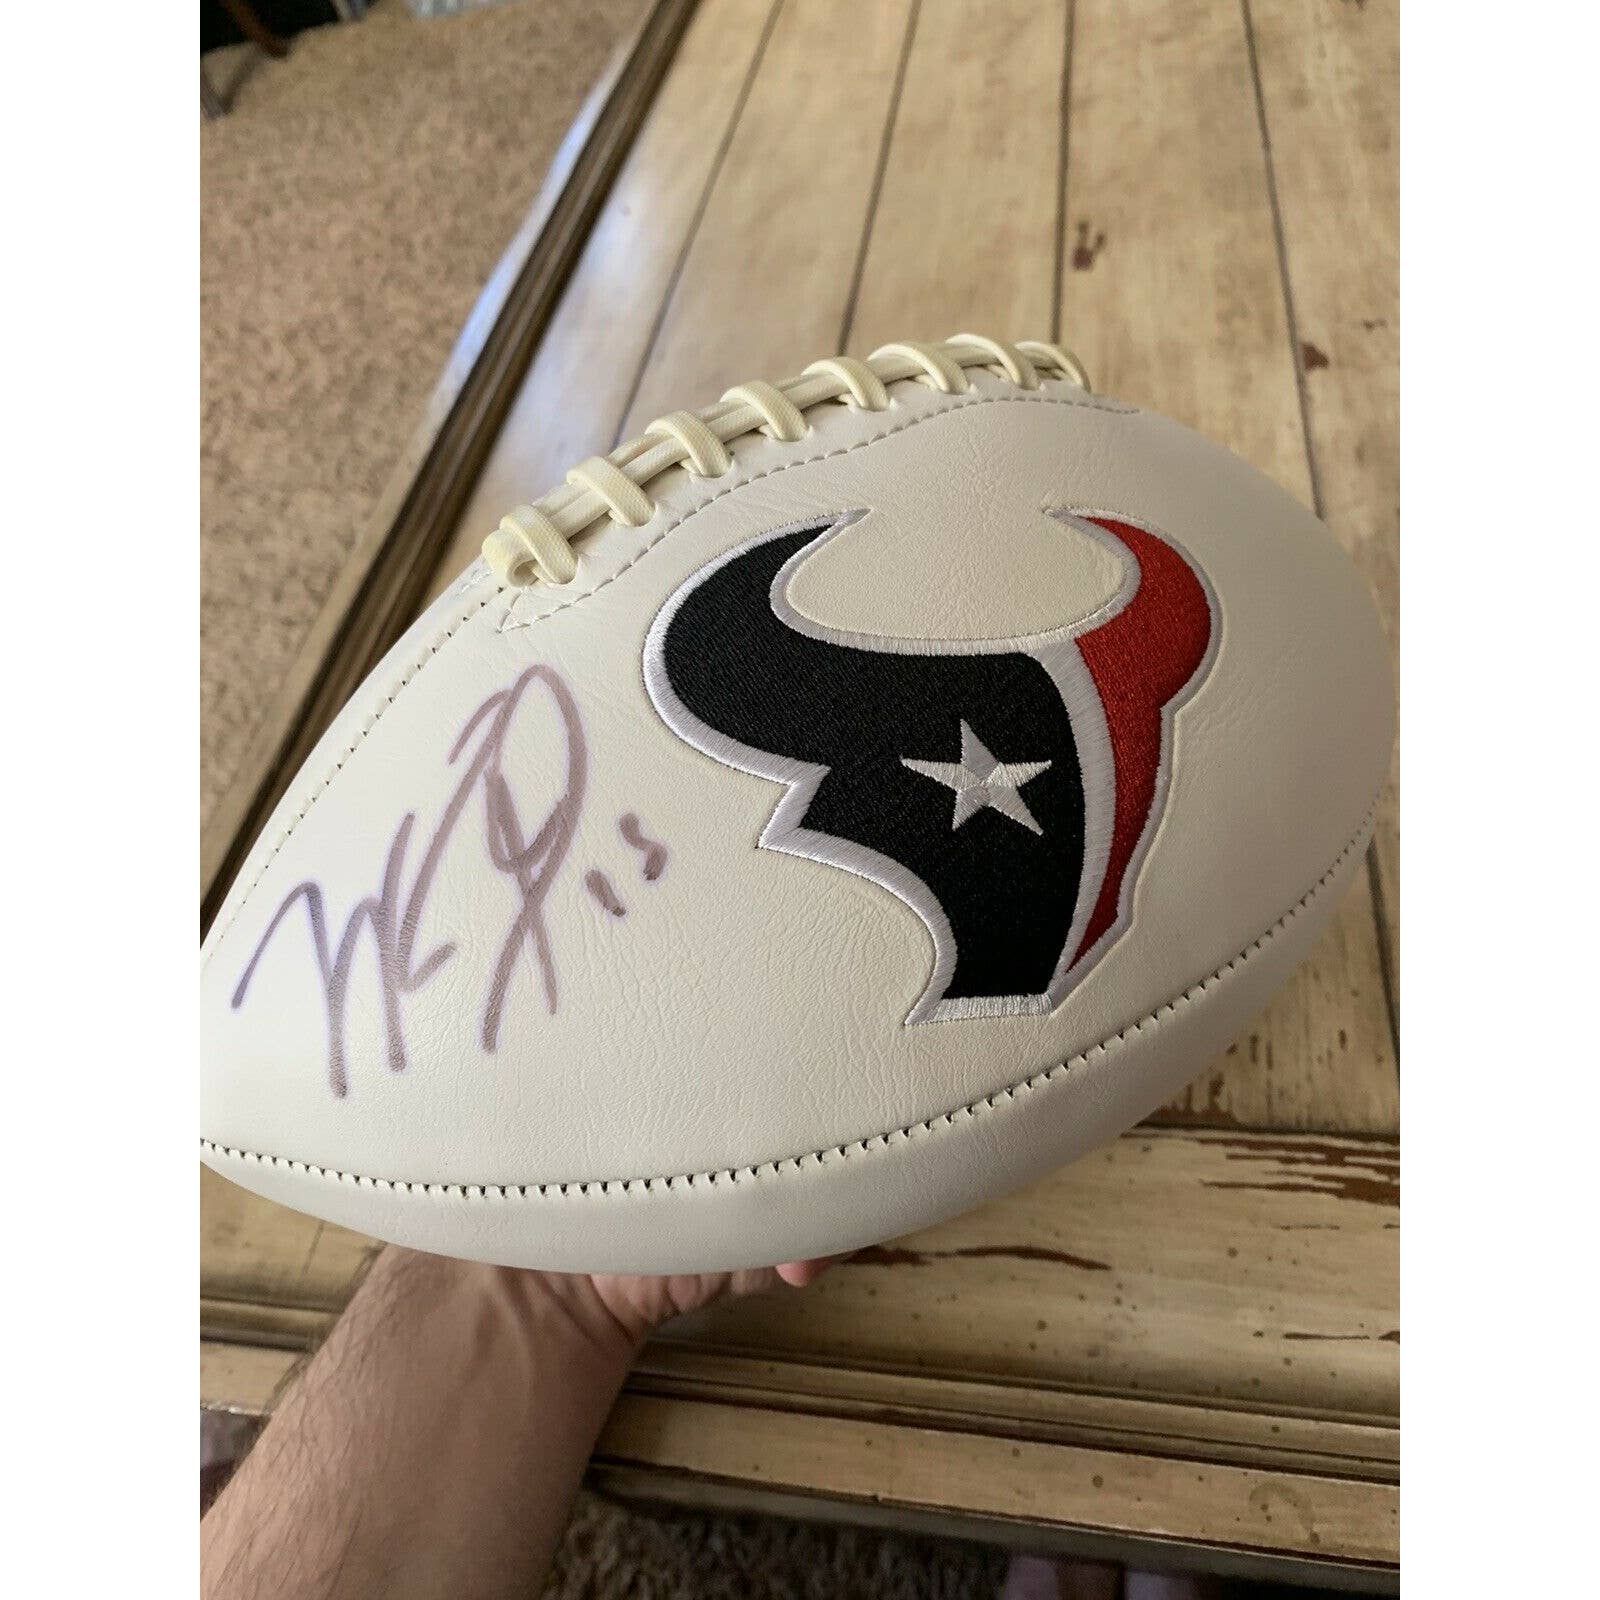 Will Fuller Autographed/Signed Football JSA COA Houston Texans - TreasuresEvolved